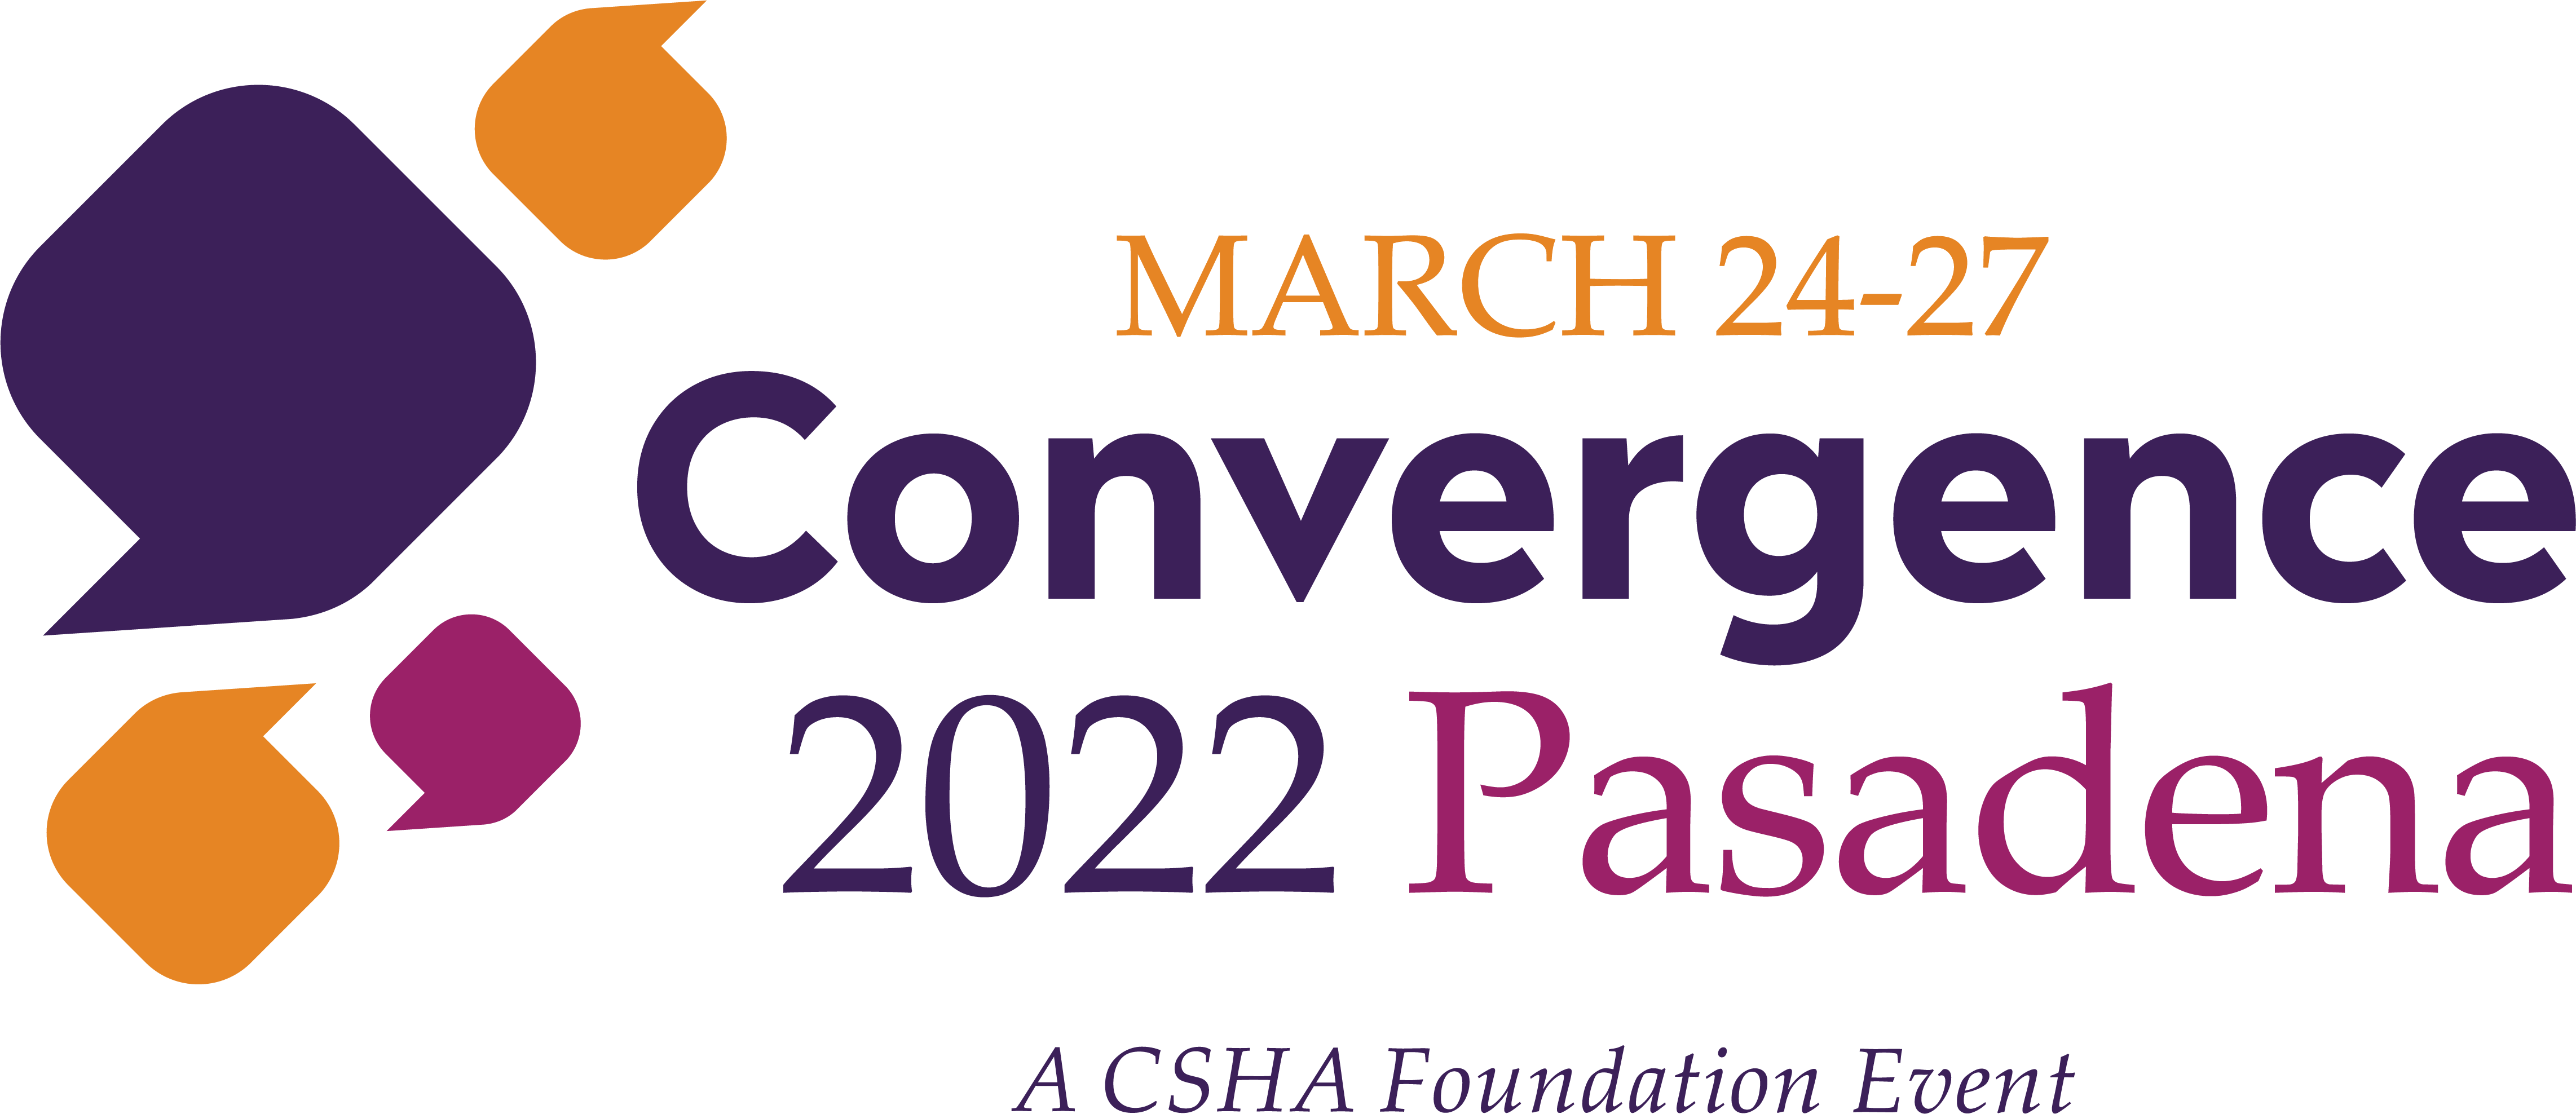 CSHA Convergence 2022